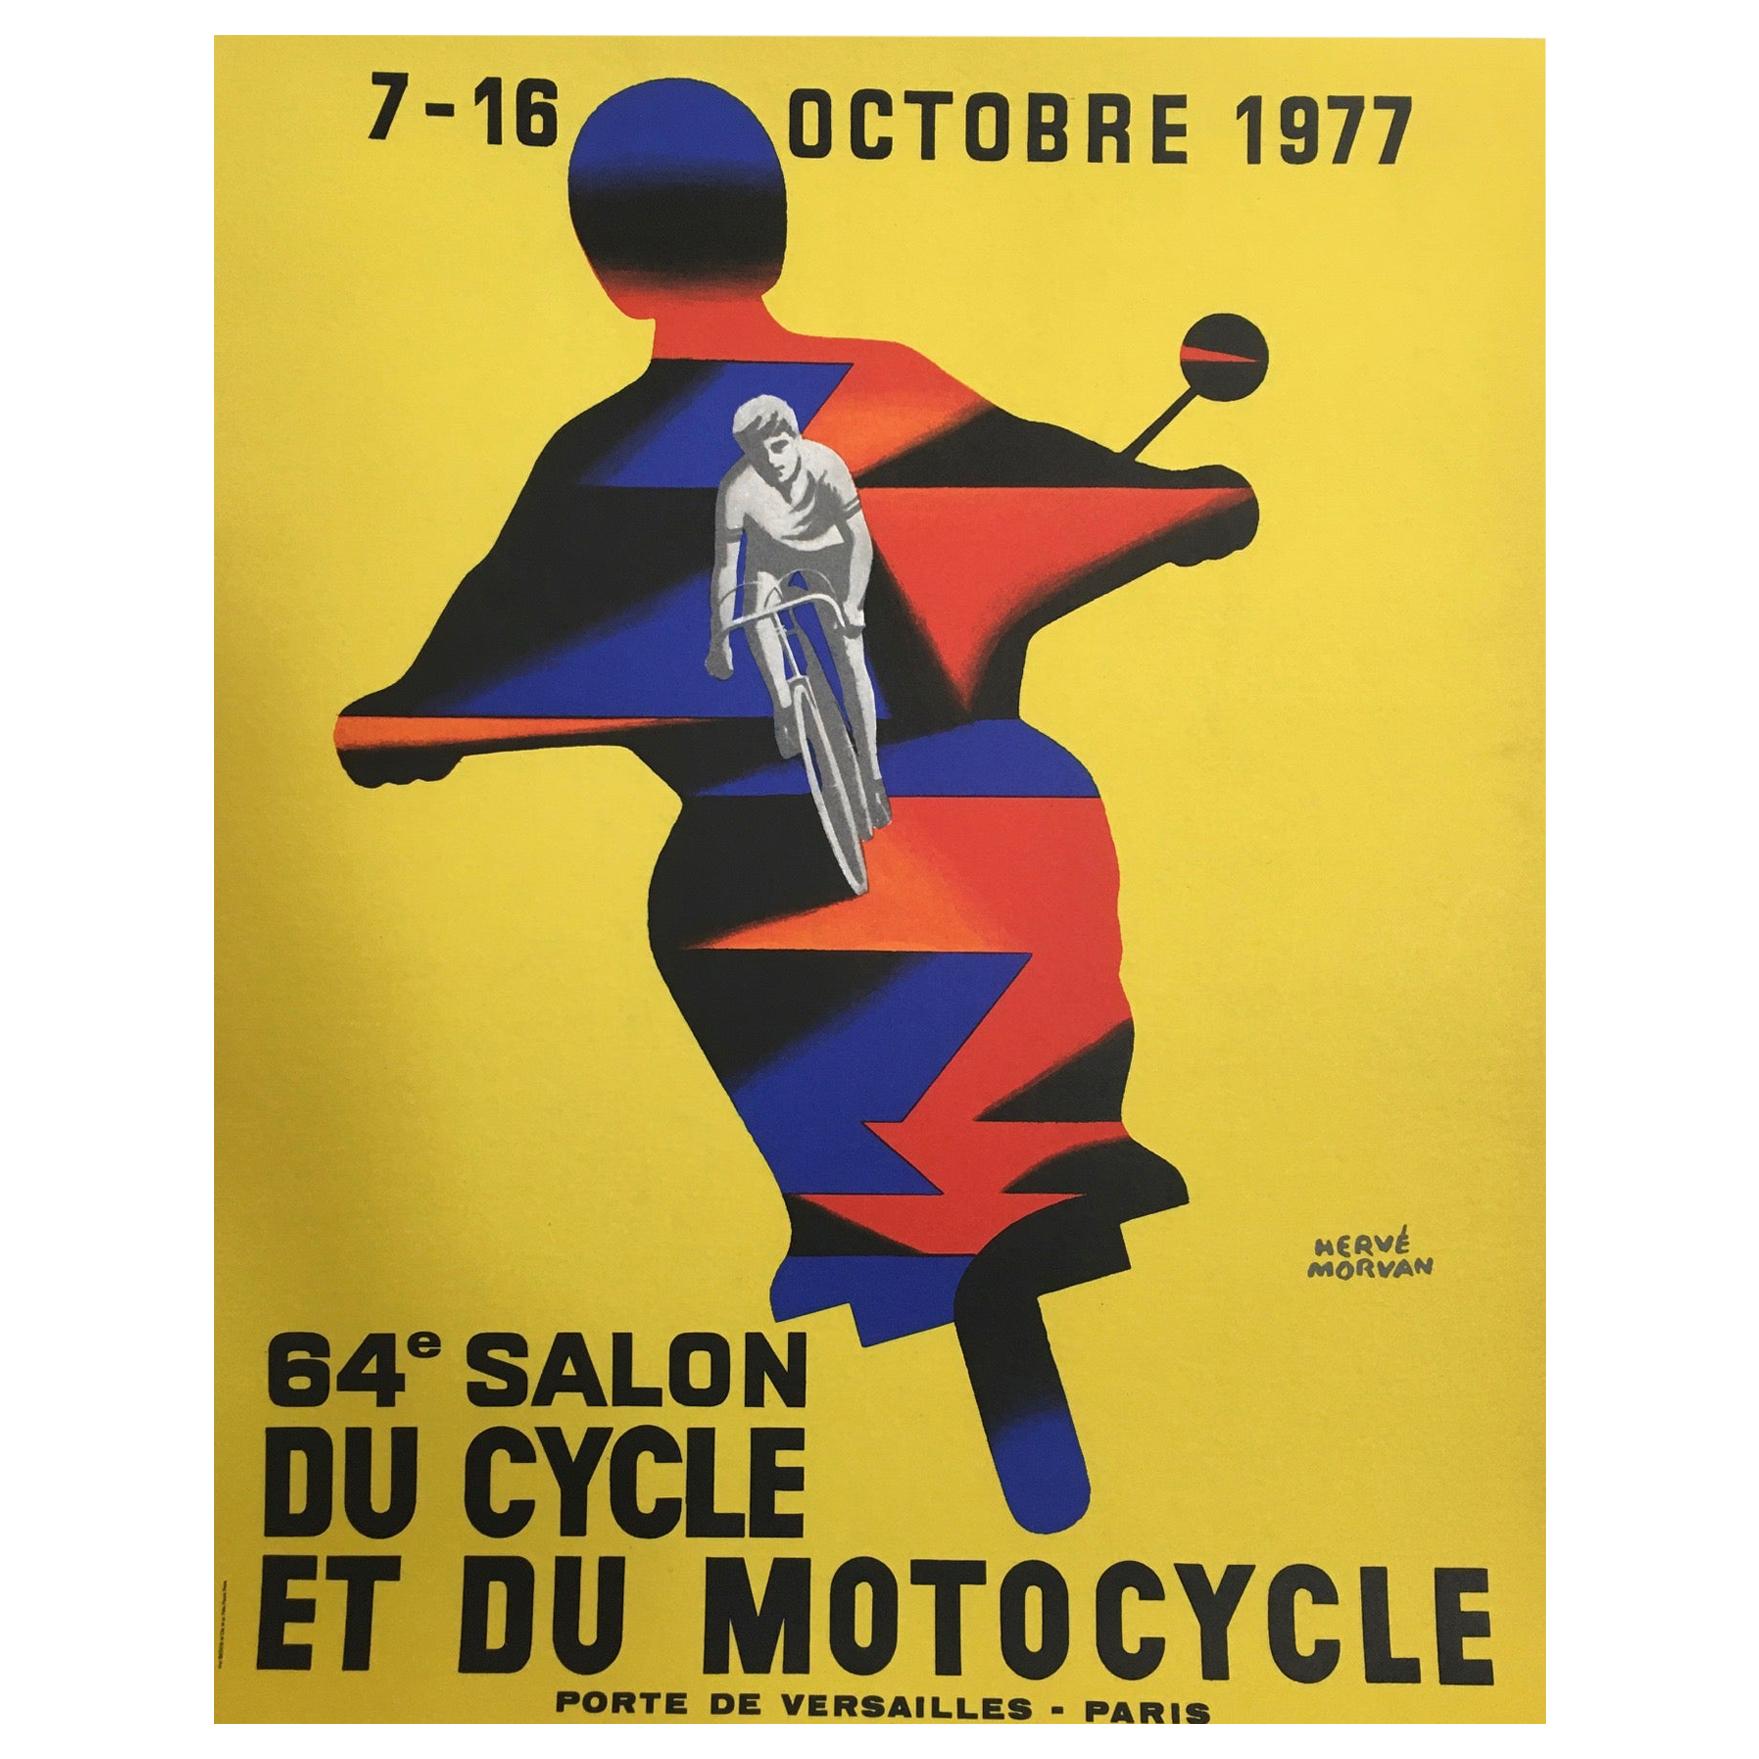 Herve Morvan, Original Vintage Poster, 'Cycle and Motorcycle Show', 1977